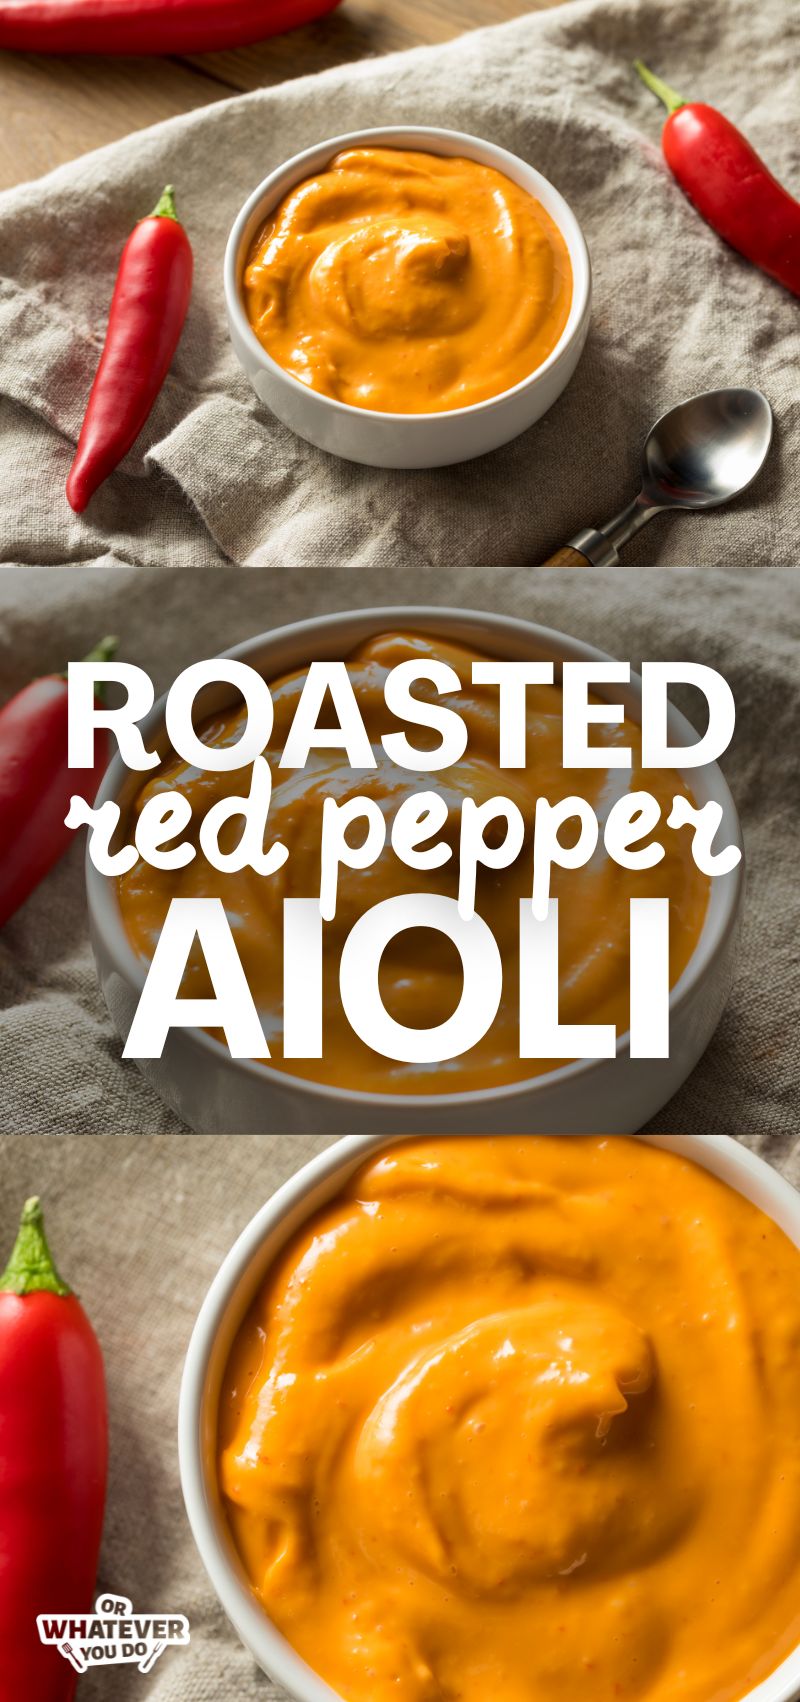 Roasted Red Pepper Aioli